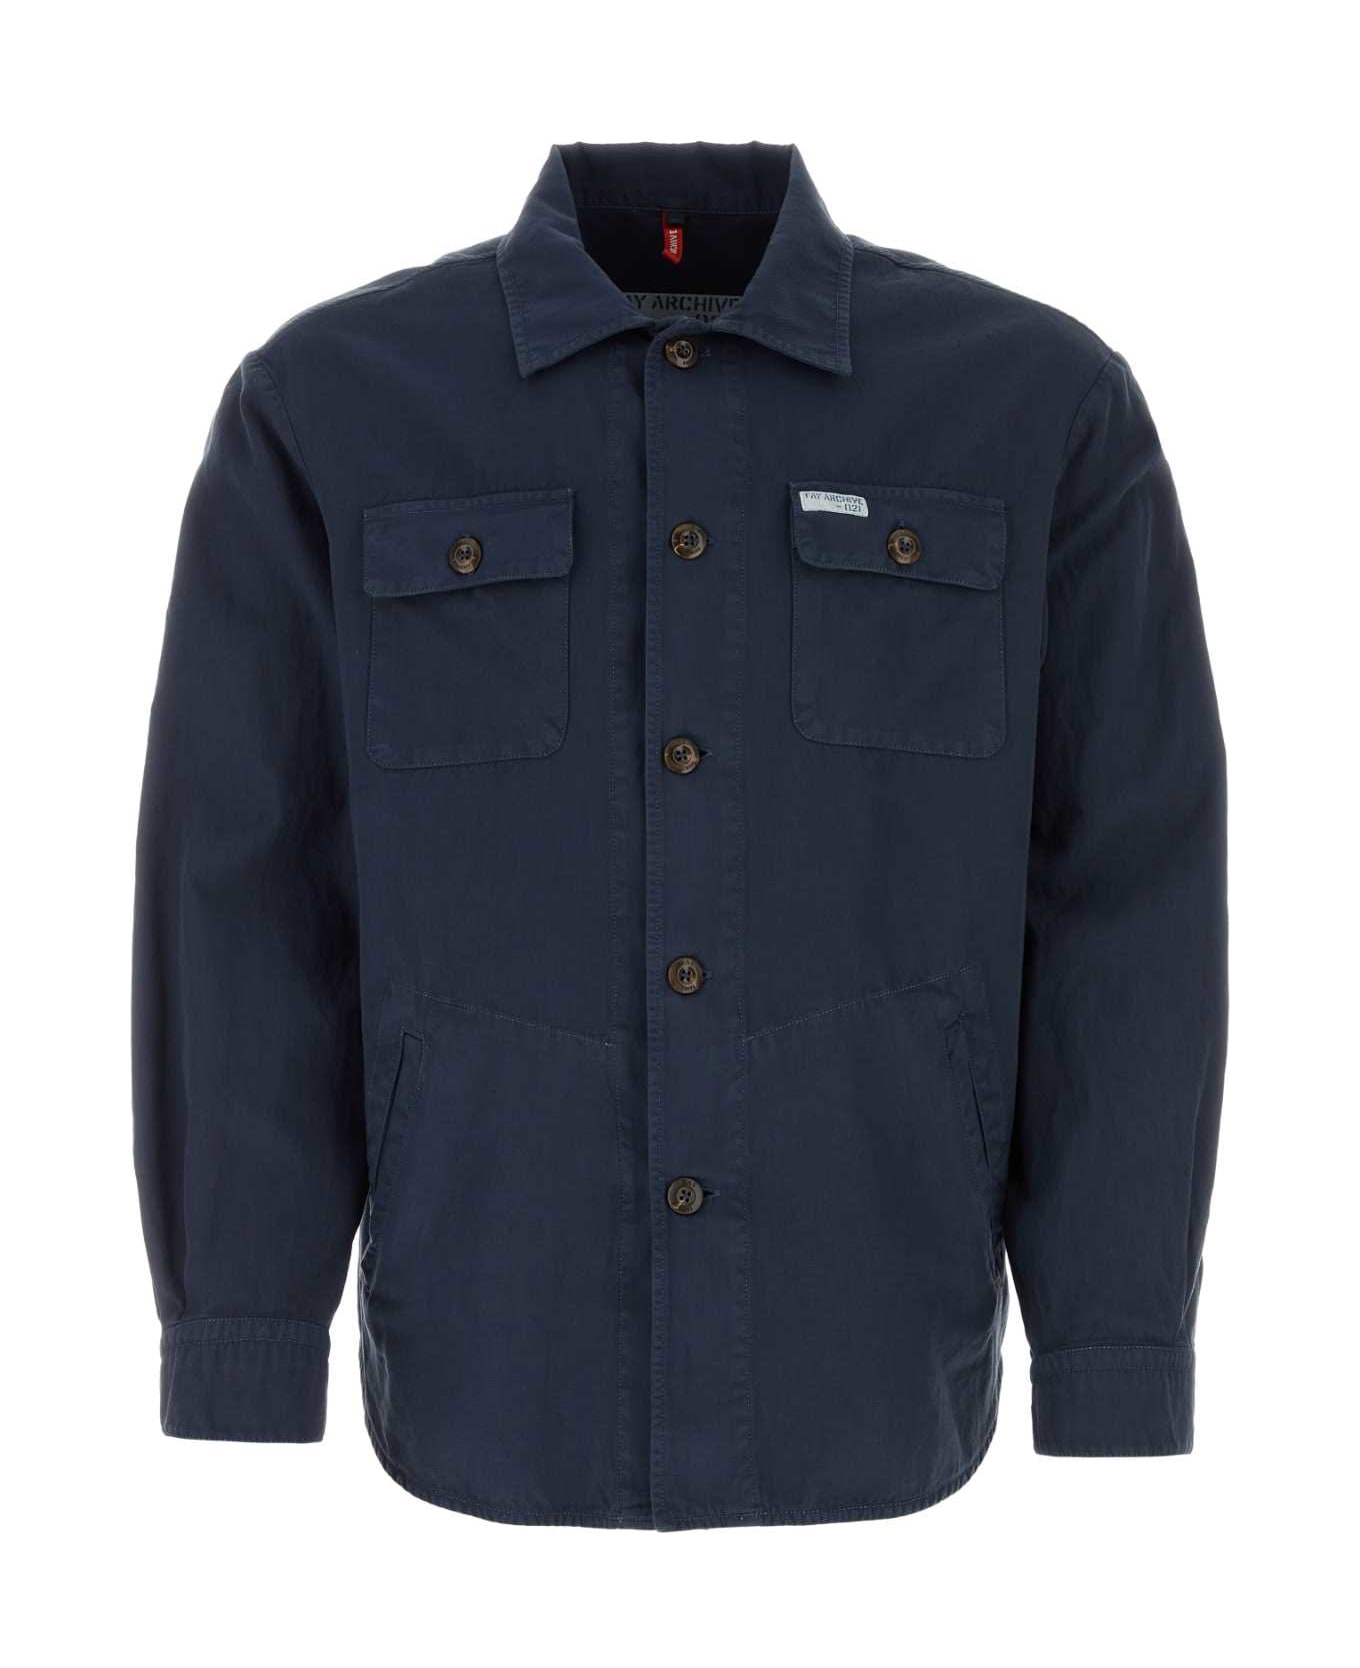 Fay Navy Blue Cotton Blend Shirt - U809 シャツ